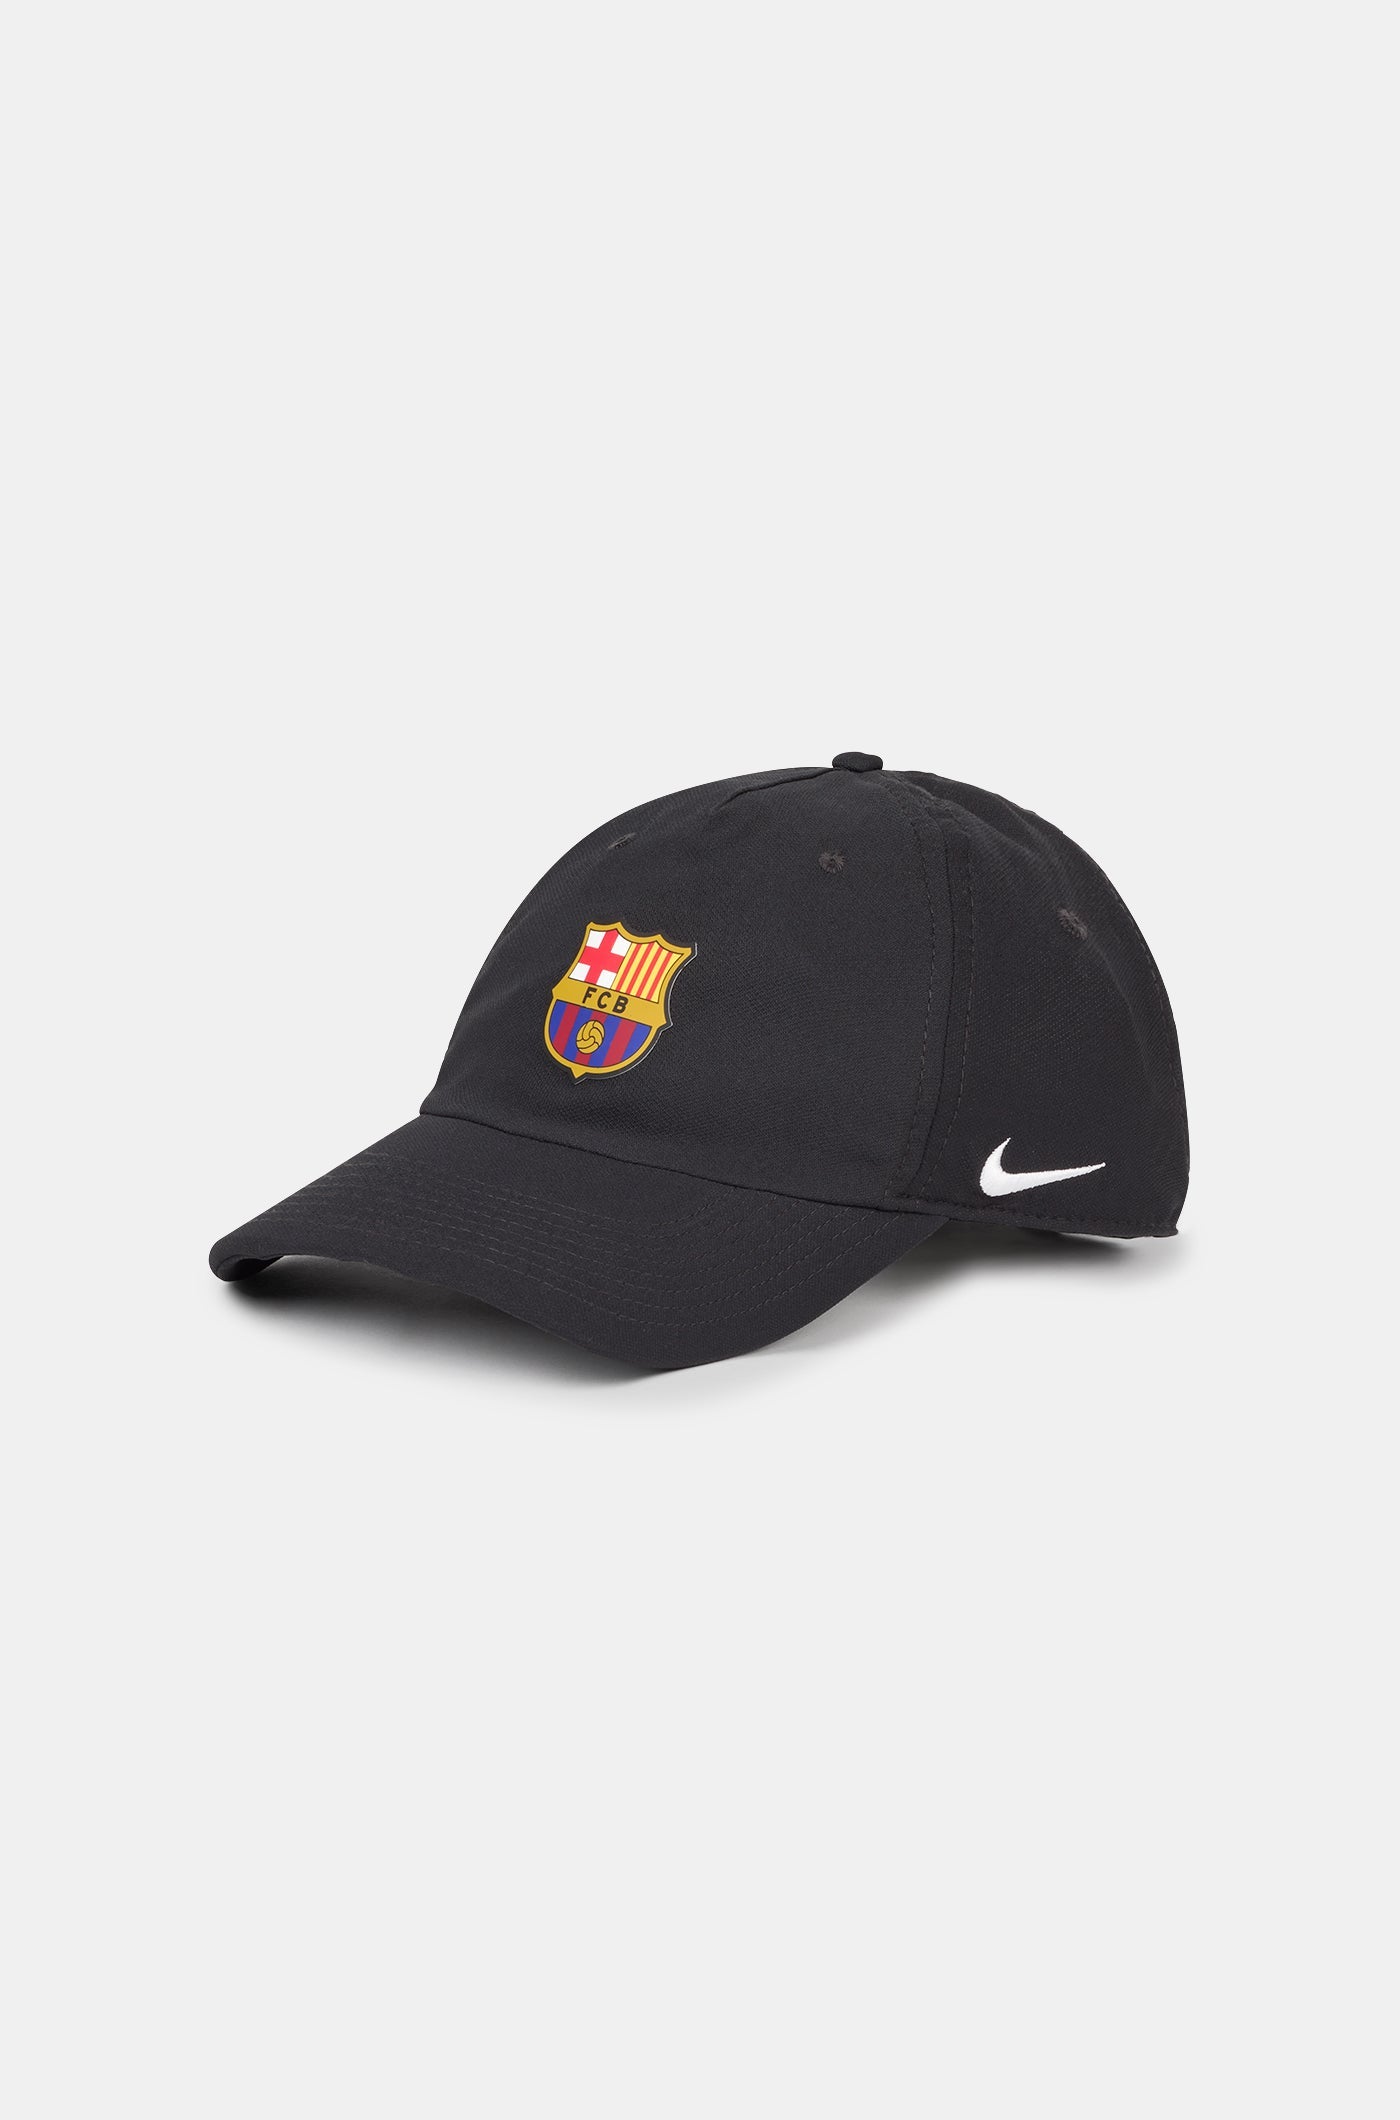 Schwarz Cap mit Wappen Barça Nike - Größe L/XL